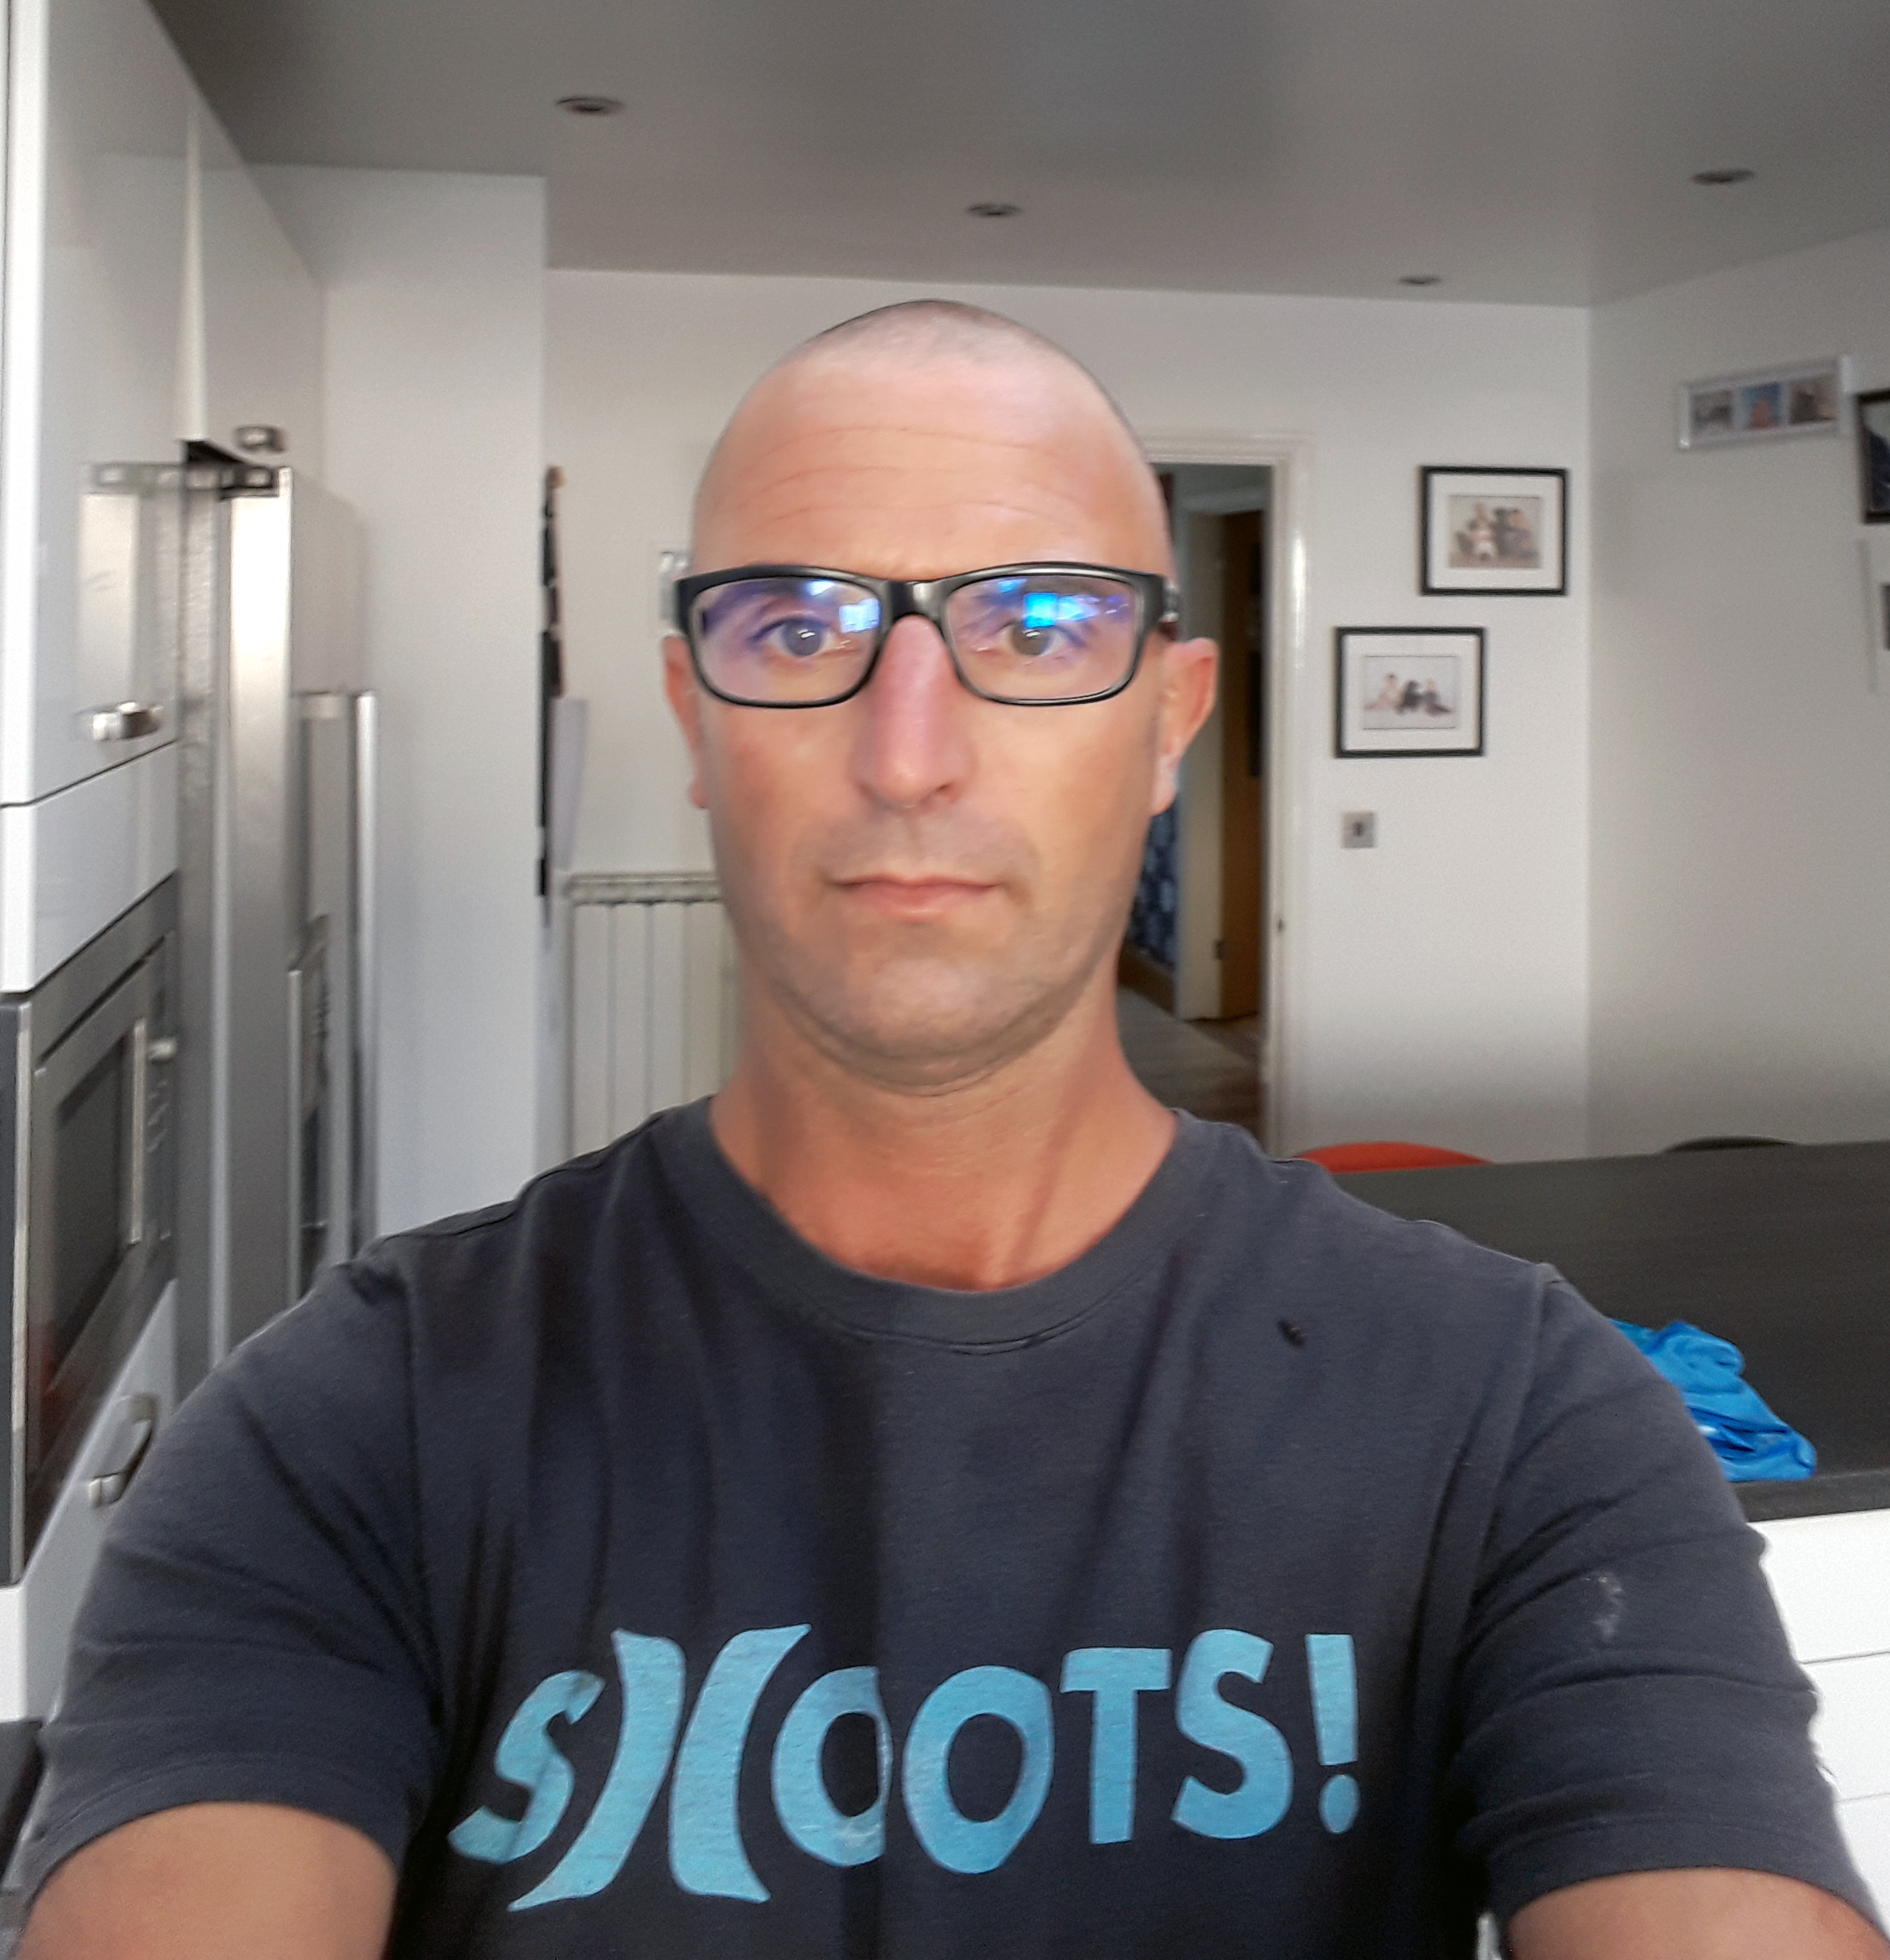 James' chemo-induced hair loss